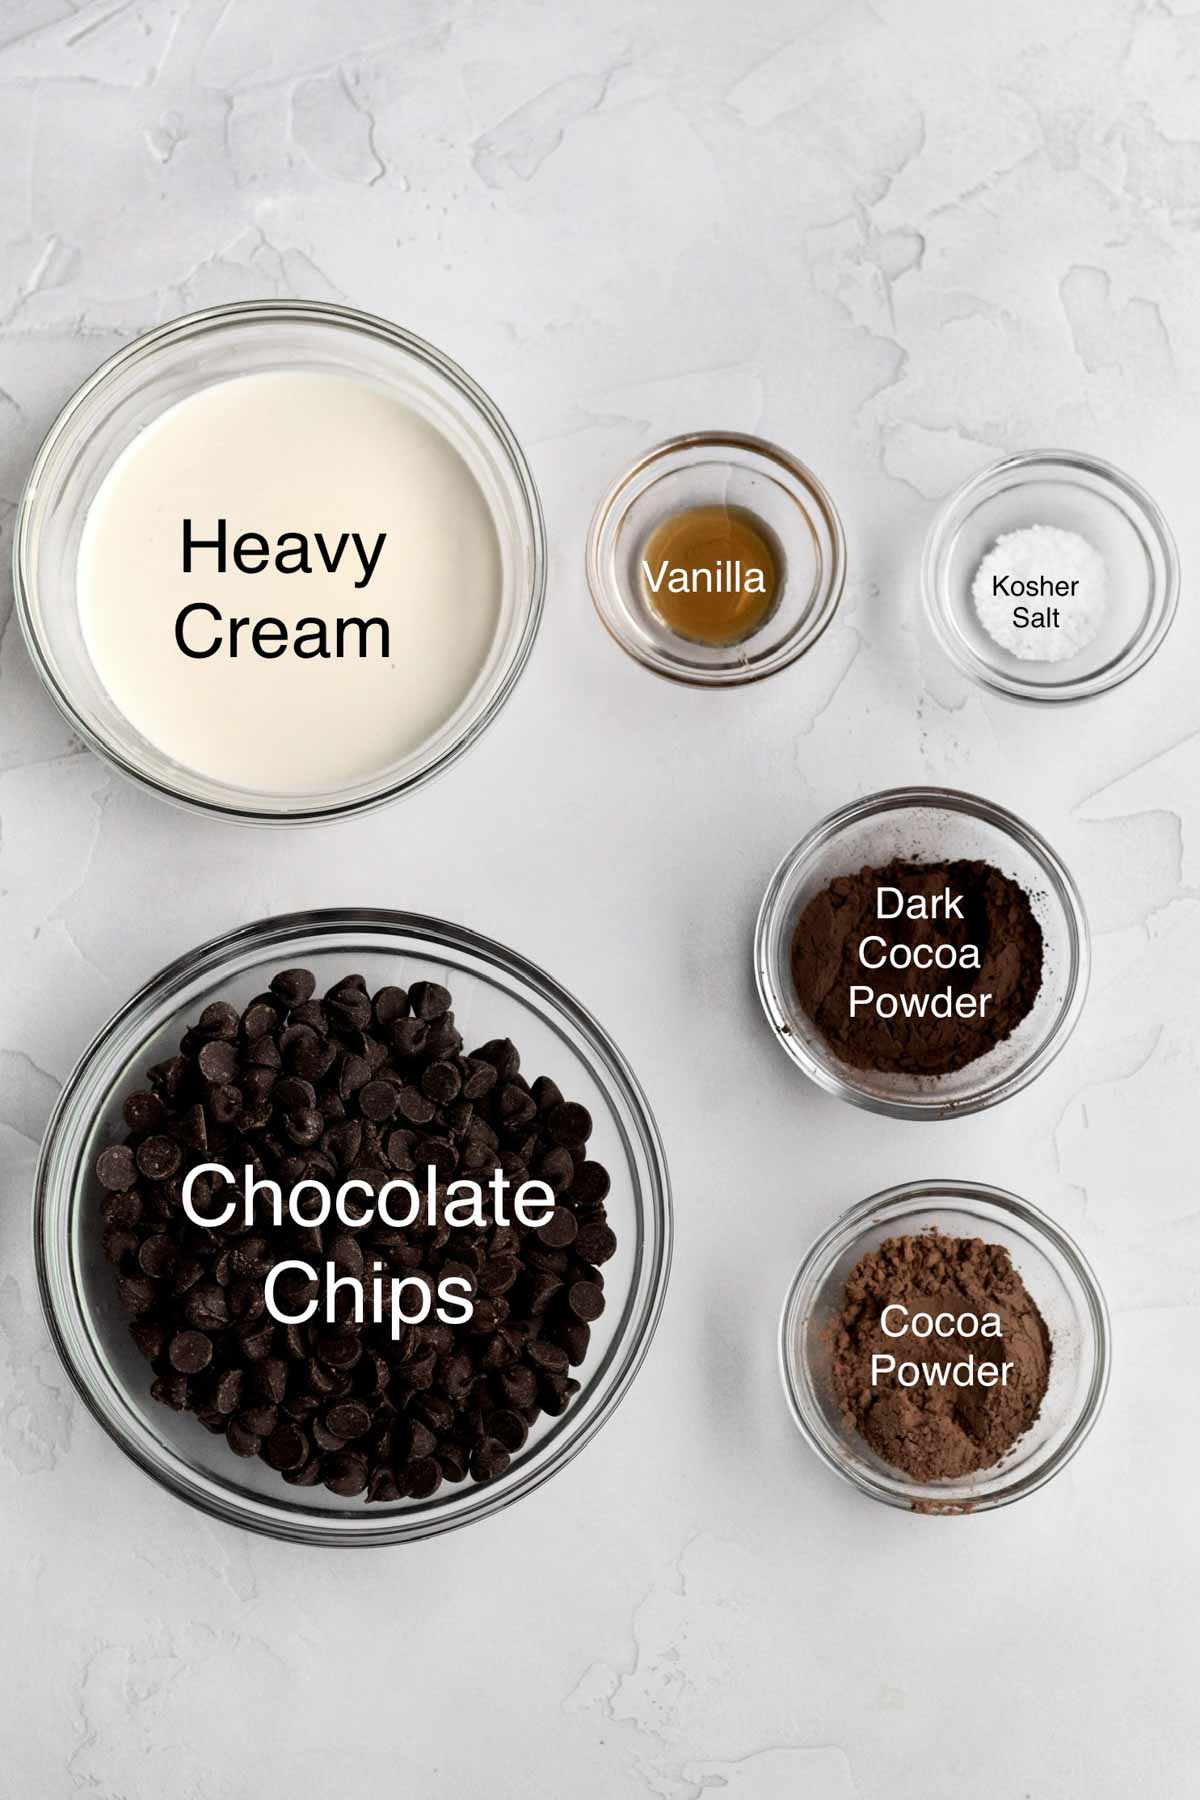 Heavy cream, vanilla, kosher salt, chocolate chips, dark cocoa powder and regular cocoa powder in separate glass bowls.